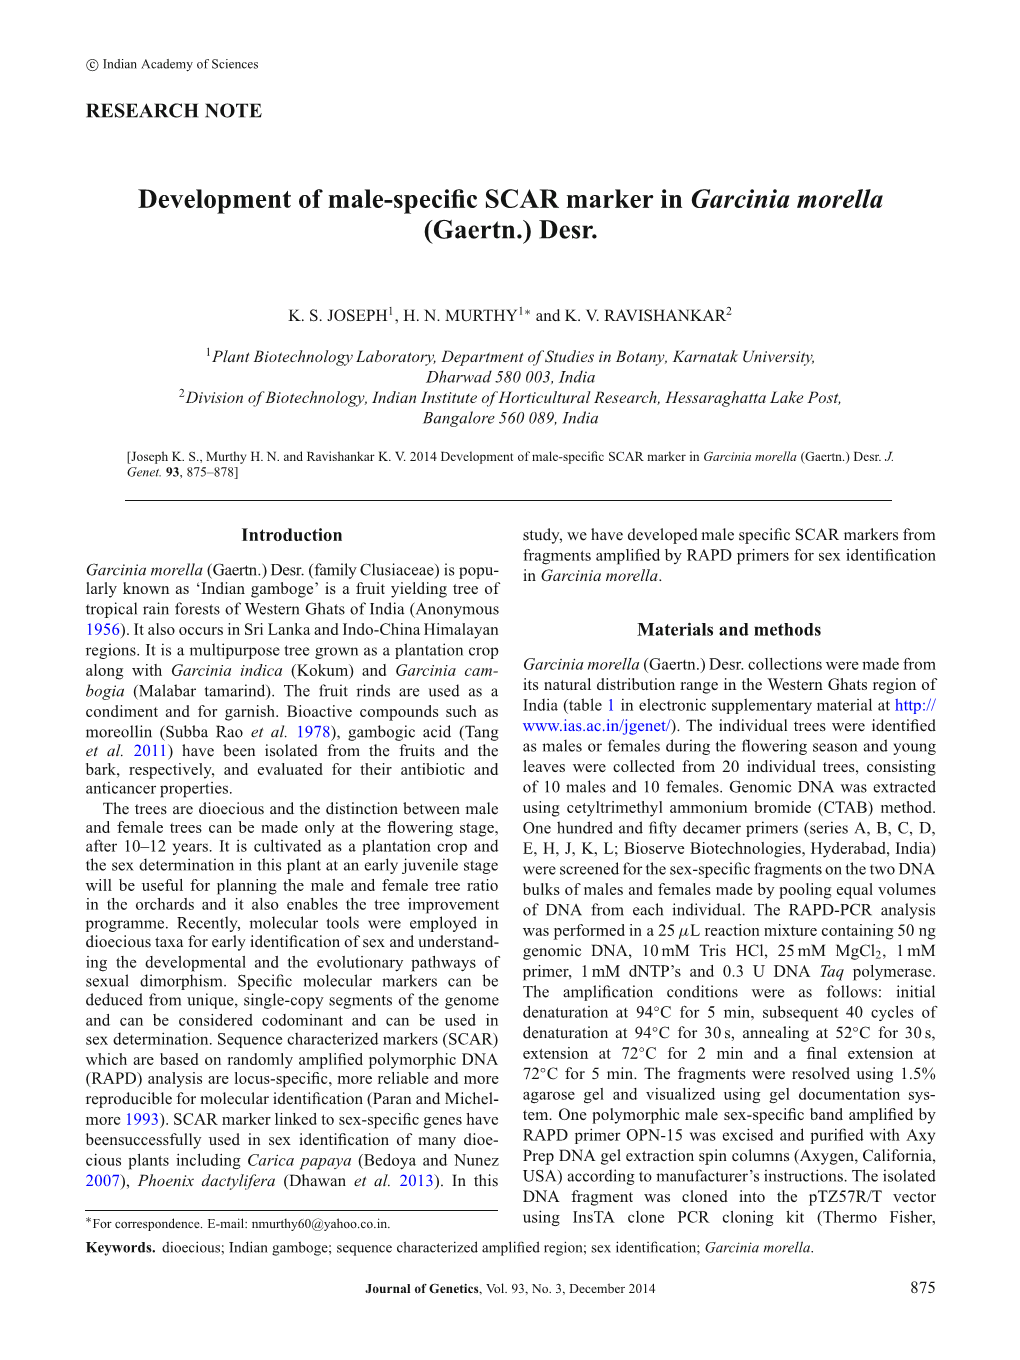 Development of Male-Specific SCAR Marker in Garcinia Morella (Gaertn